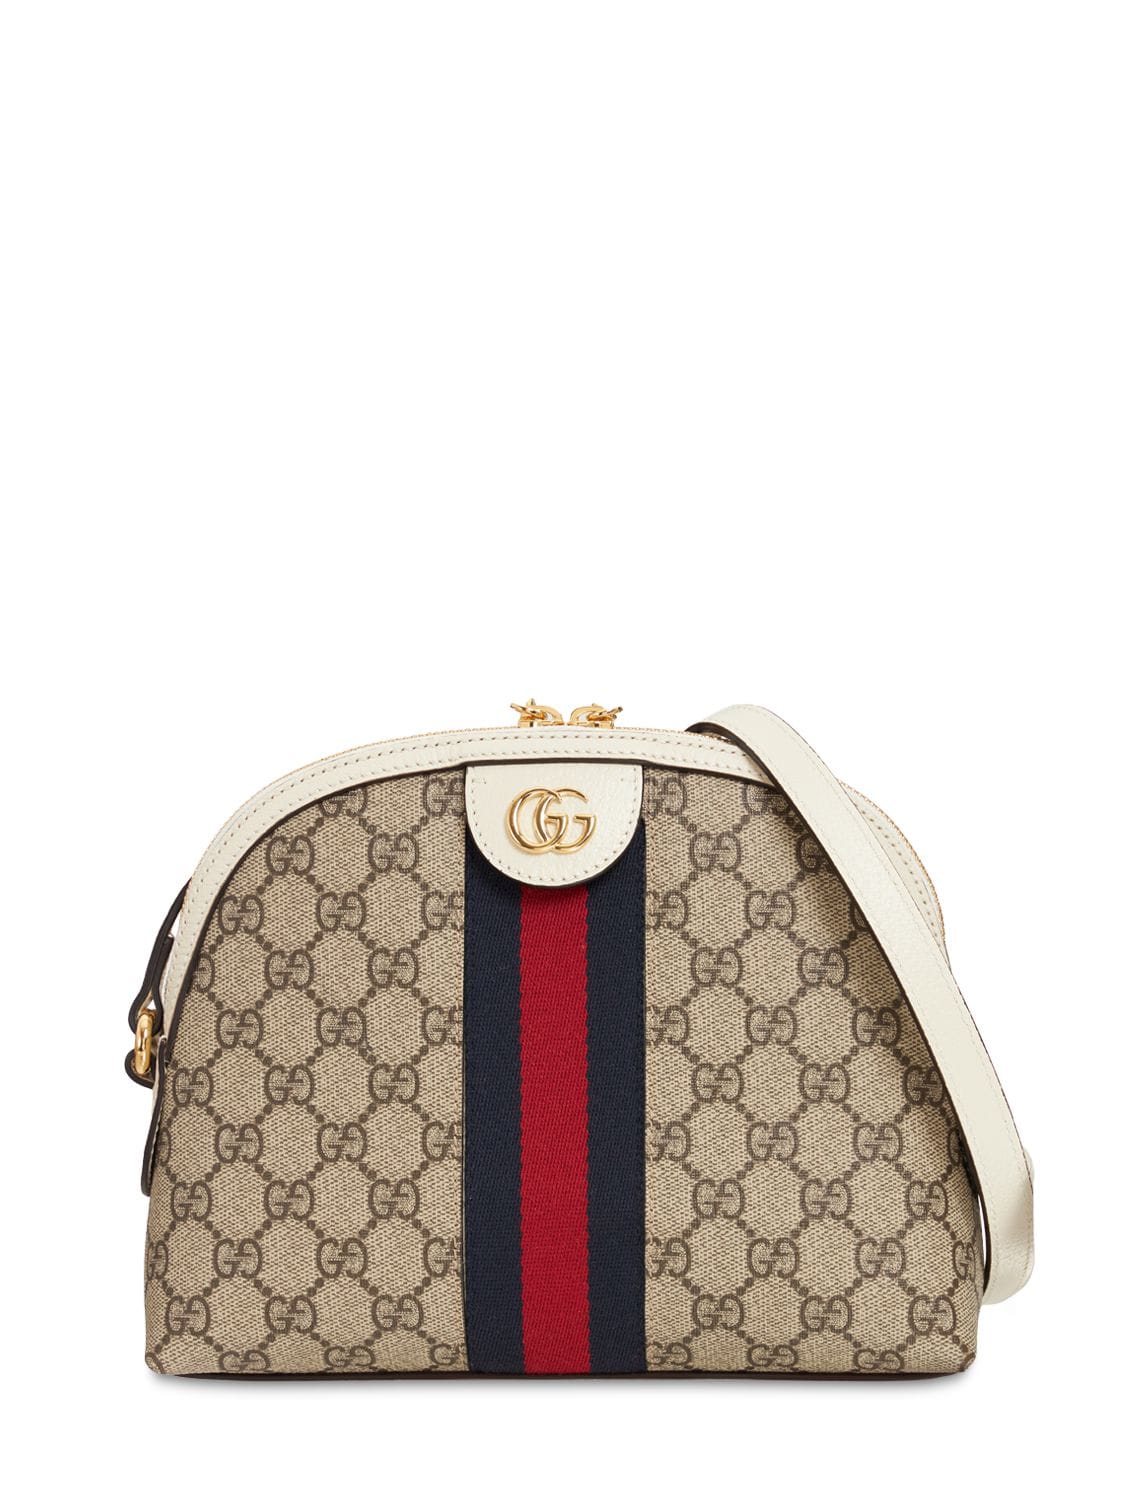 Gucci Ophidia Gg Supreme Camera Bag | ModeSens